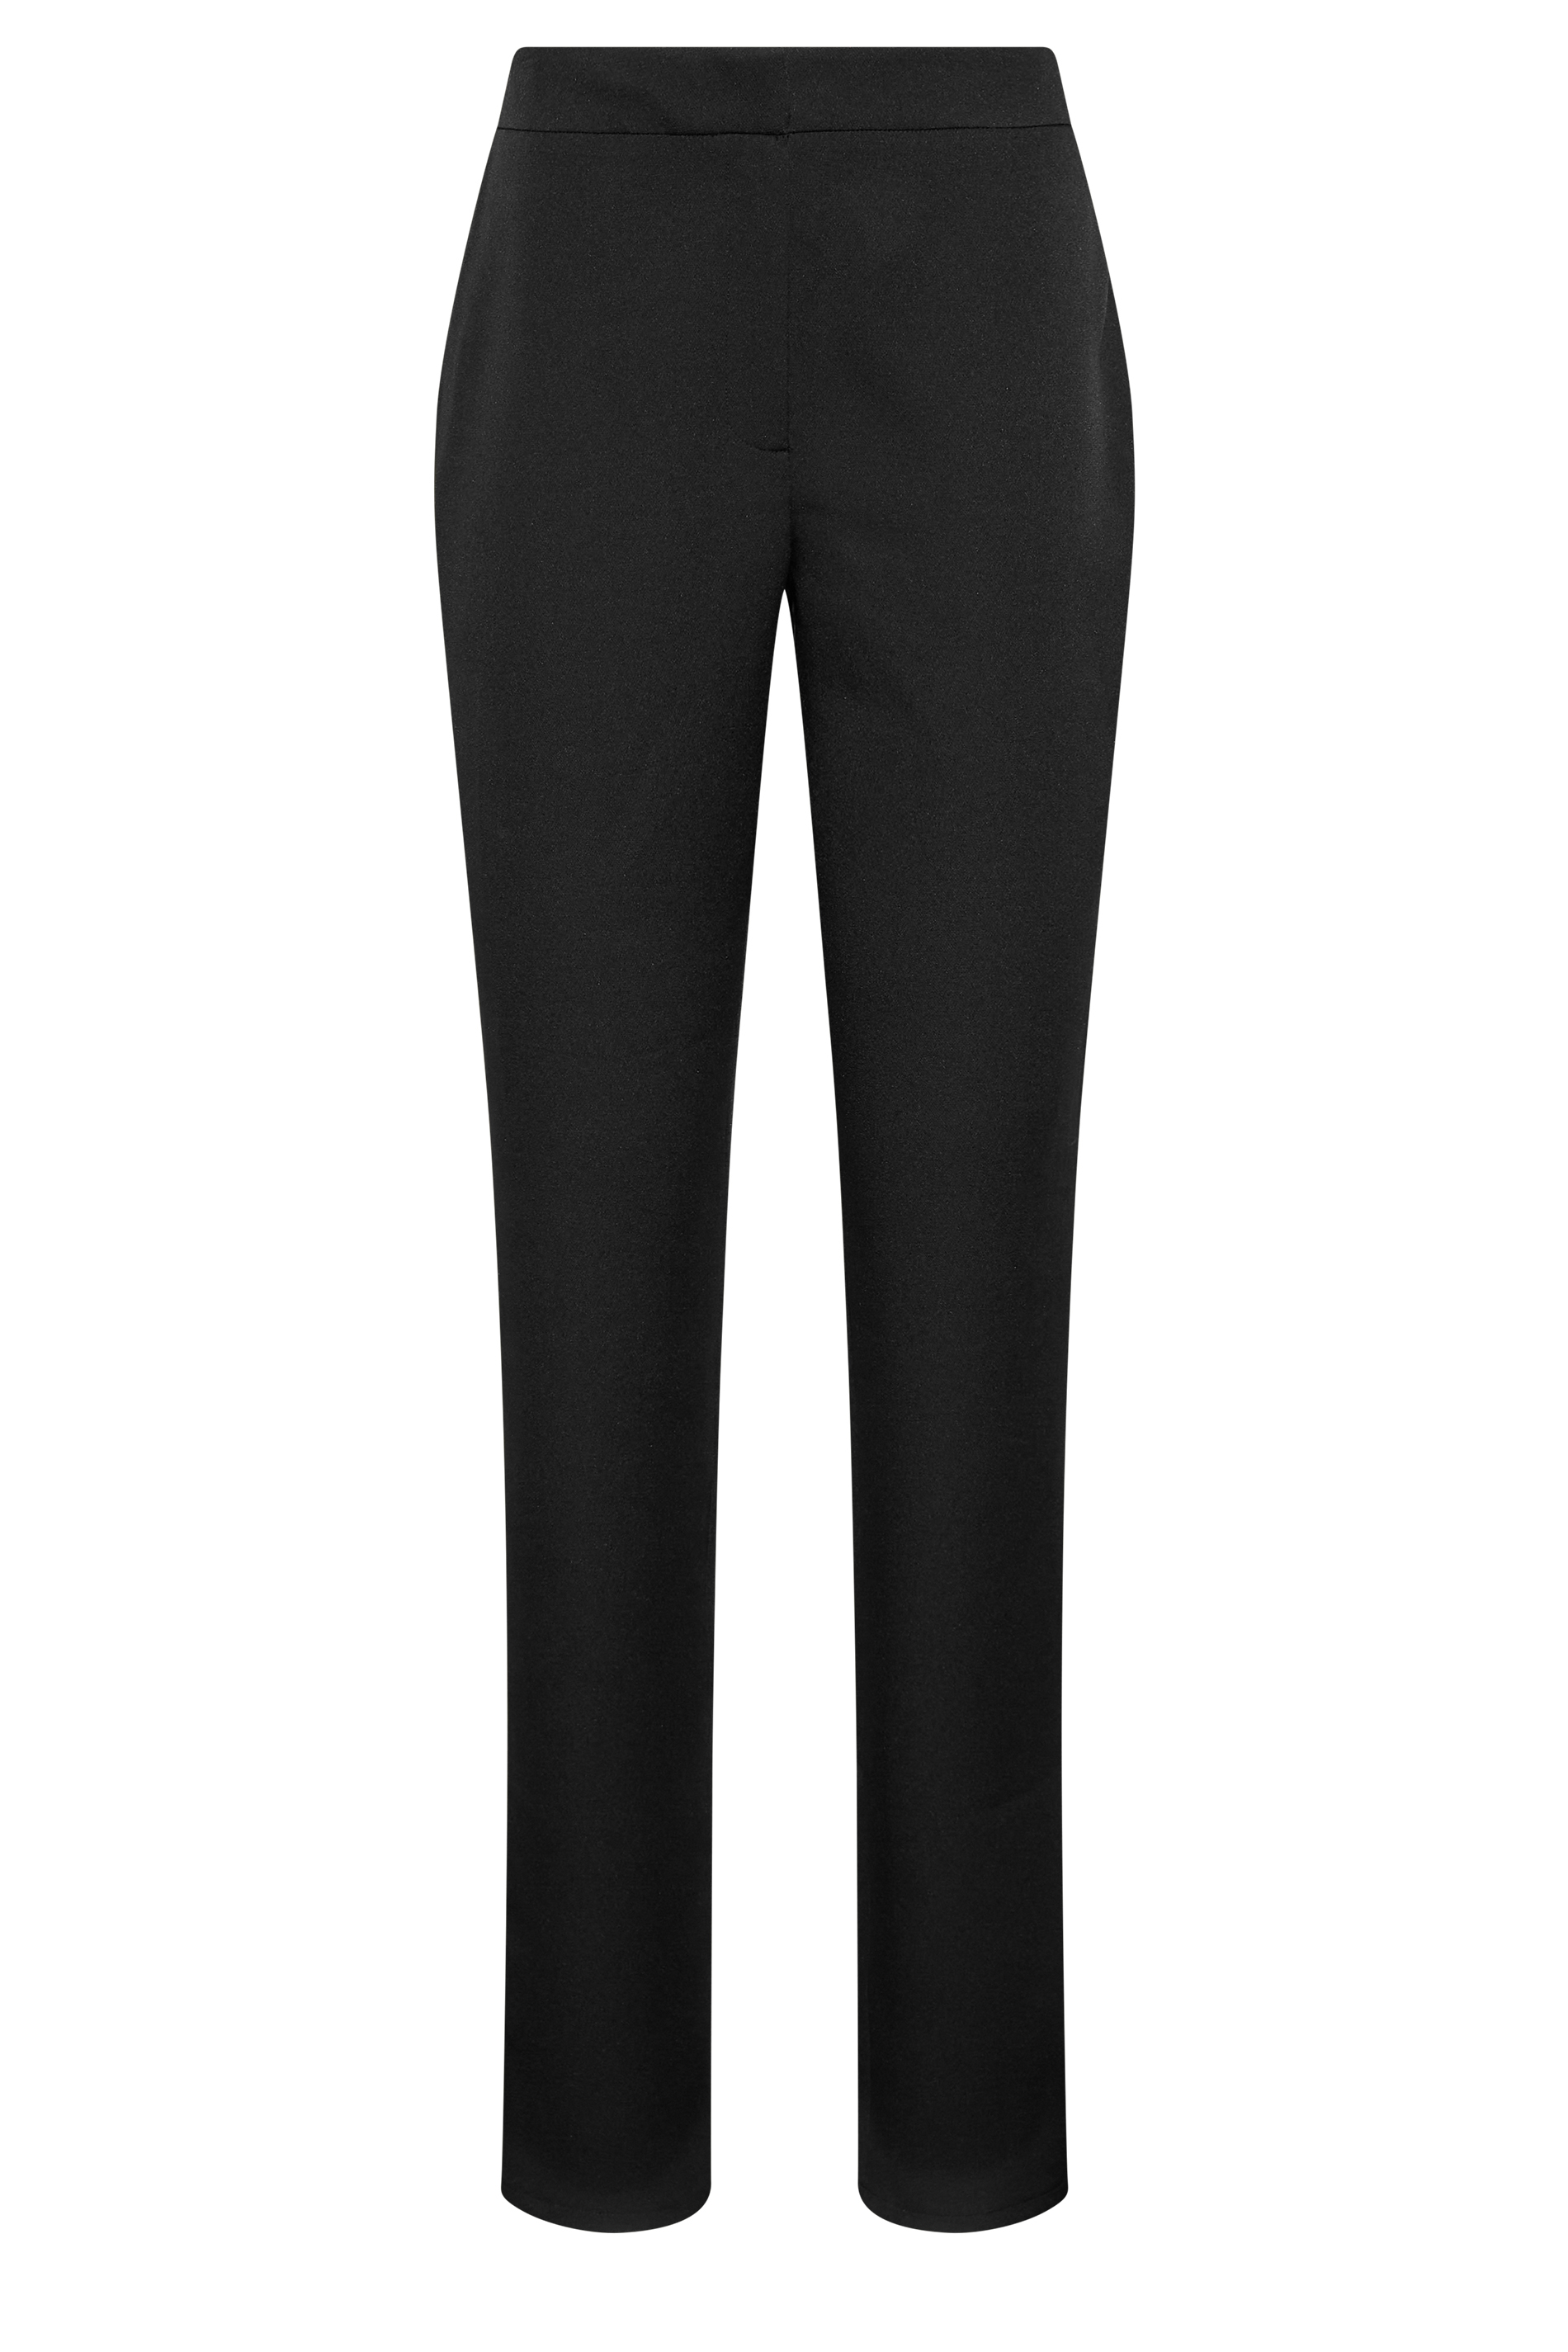 LTS Tall Women's Black Scuba Crepe Slim Leg Trousers | Long Tall Sally 3